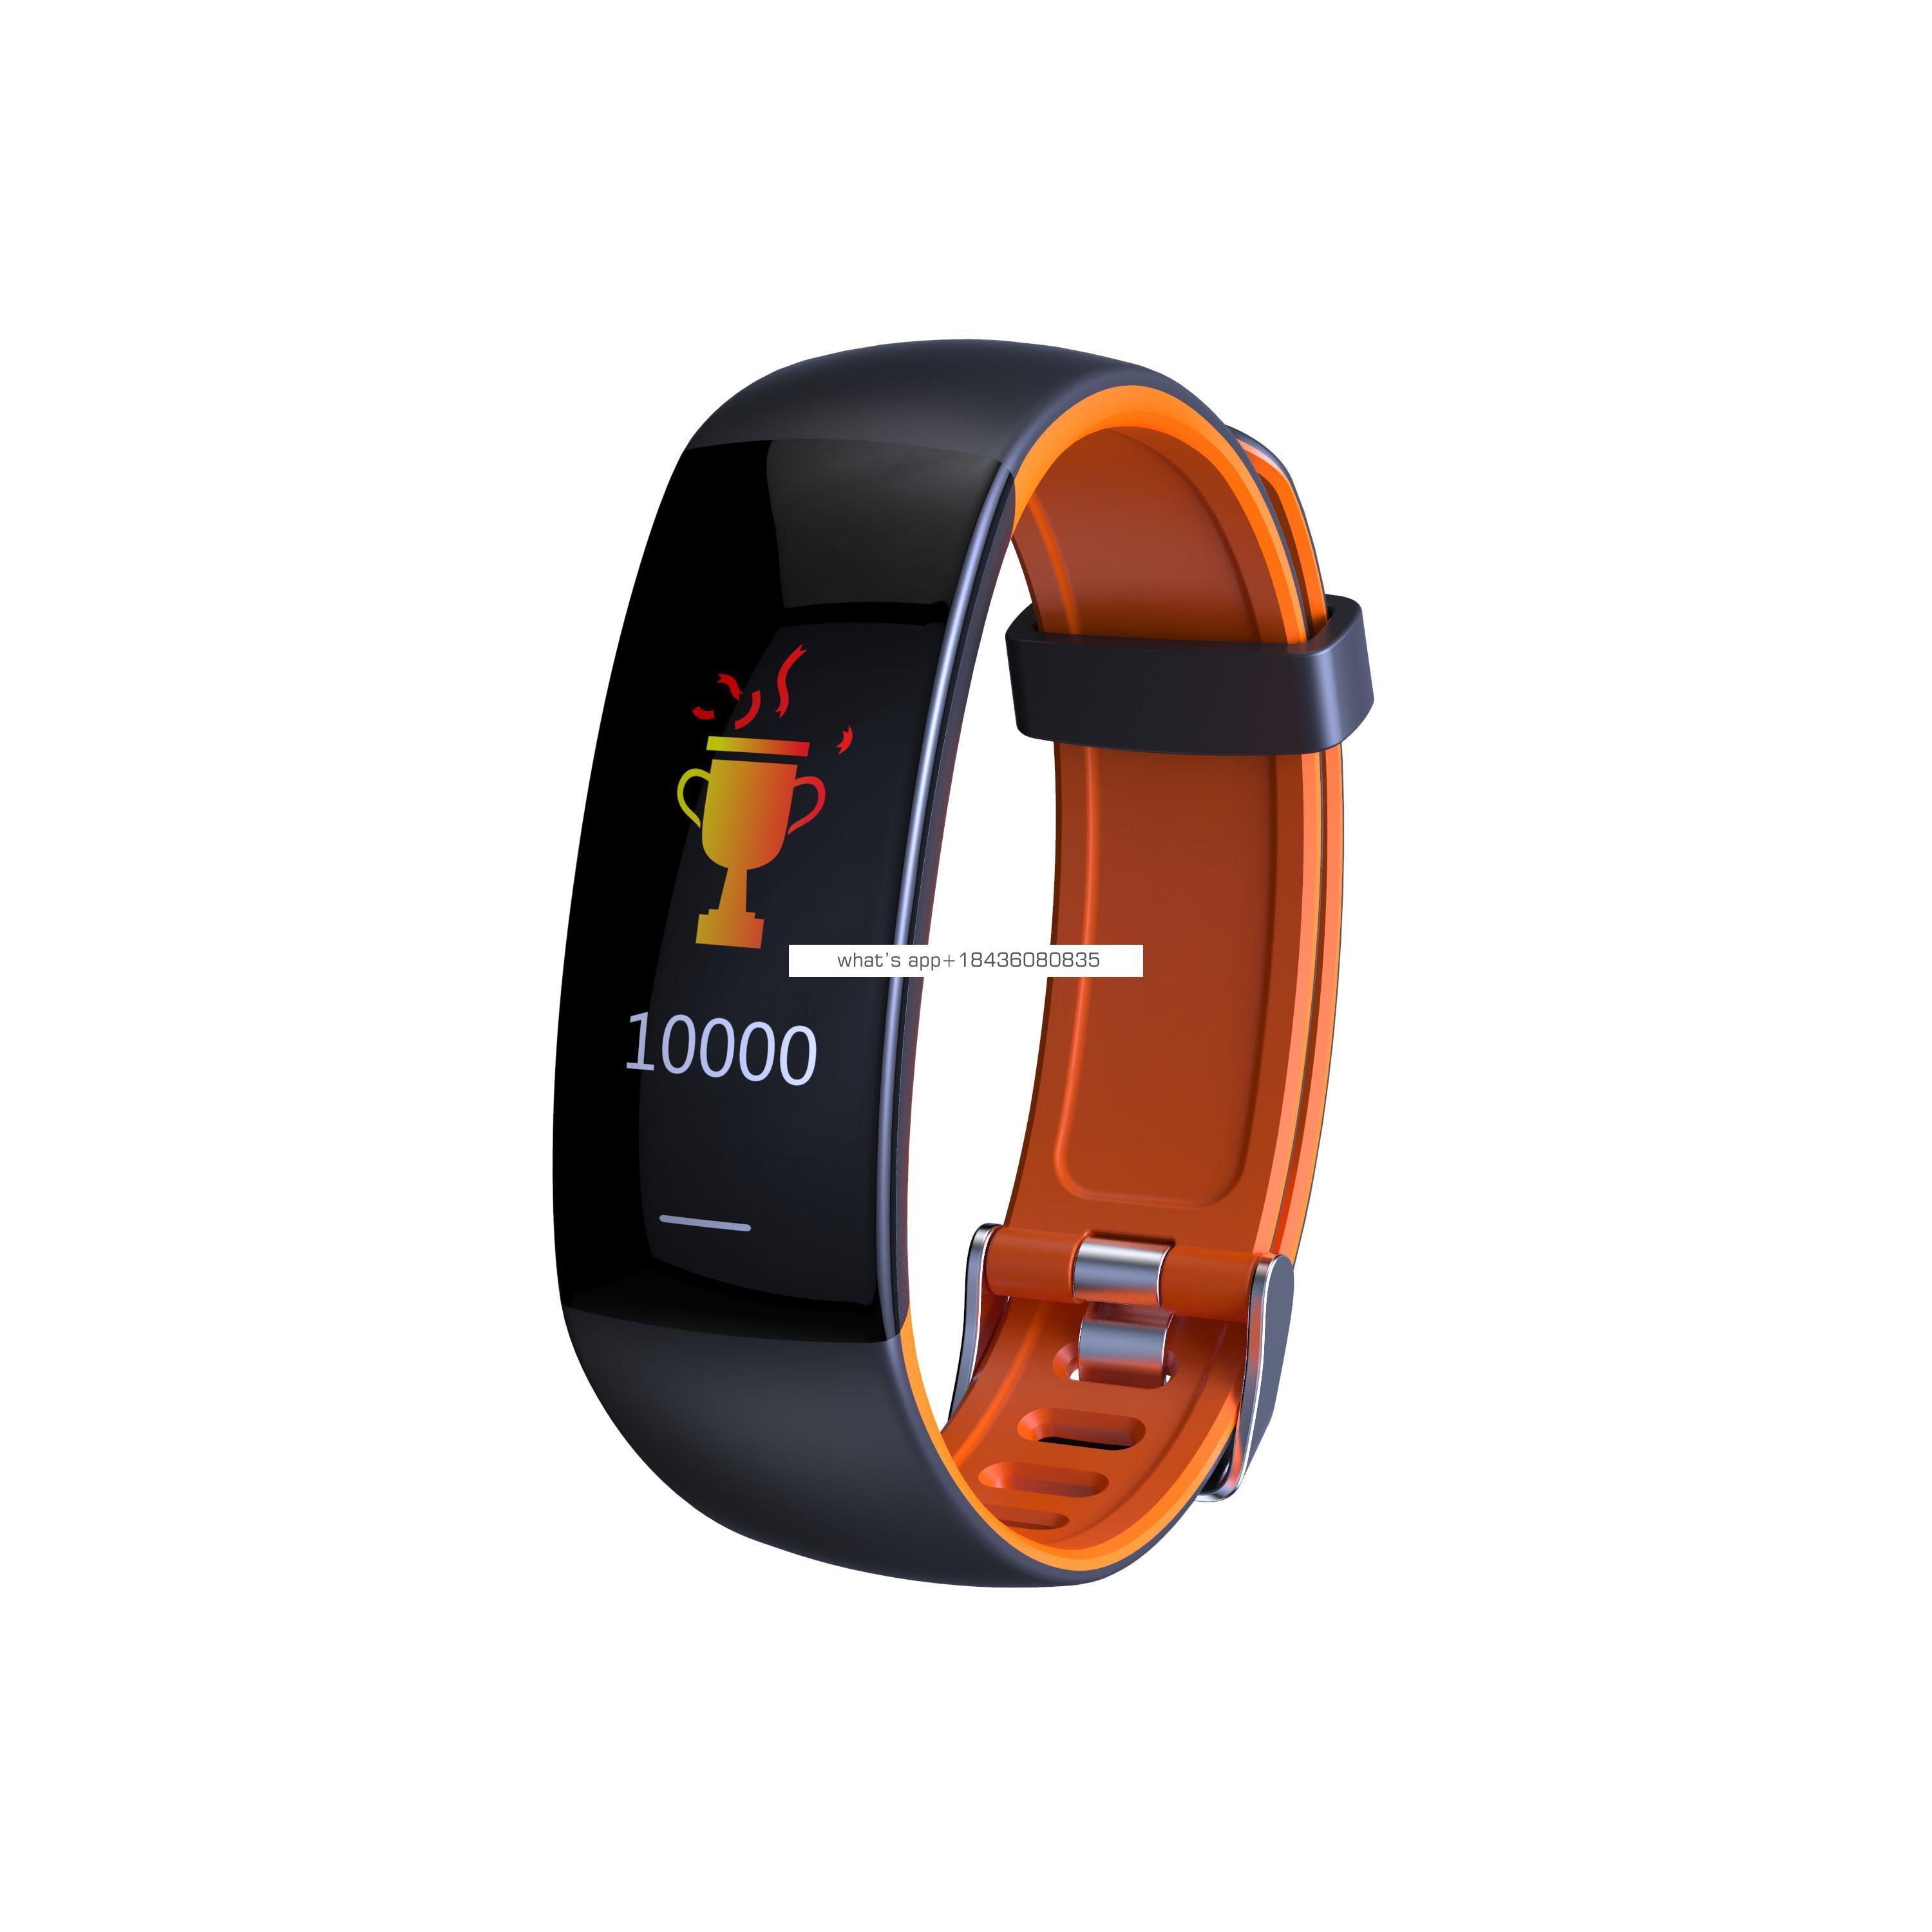 Guangzhou full android led digital sport smart bluetooth watch band bracelet smart watch heart rate camera